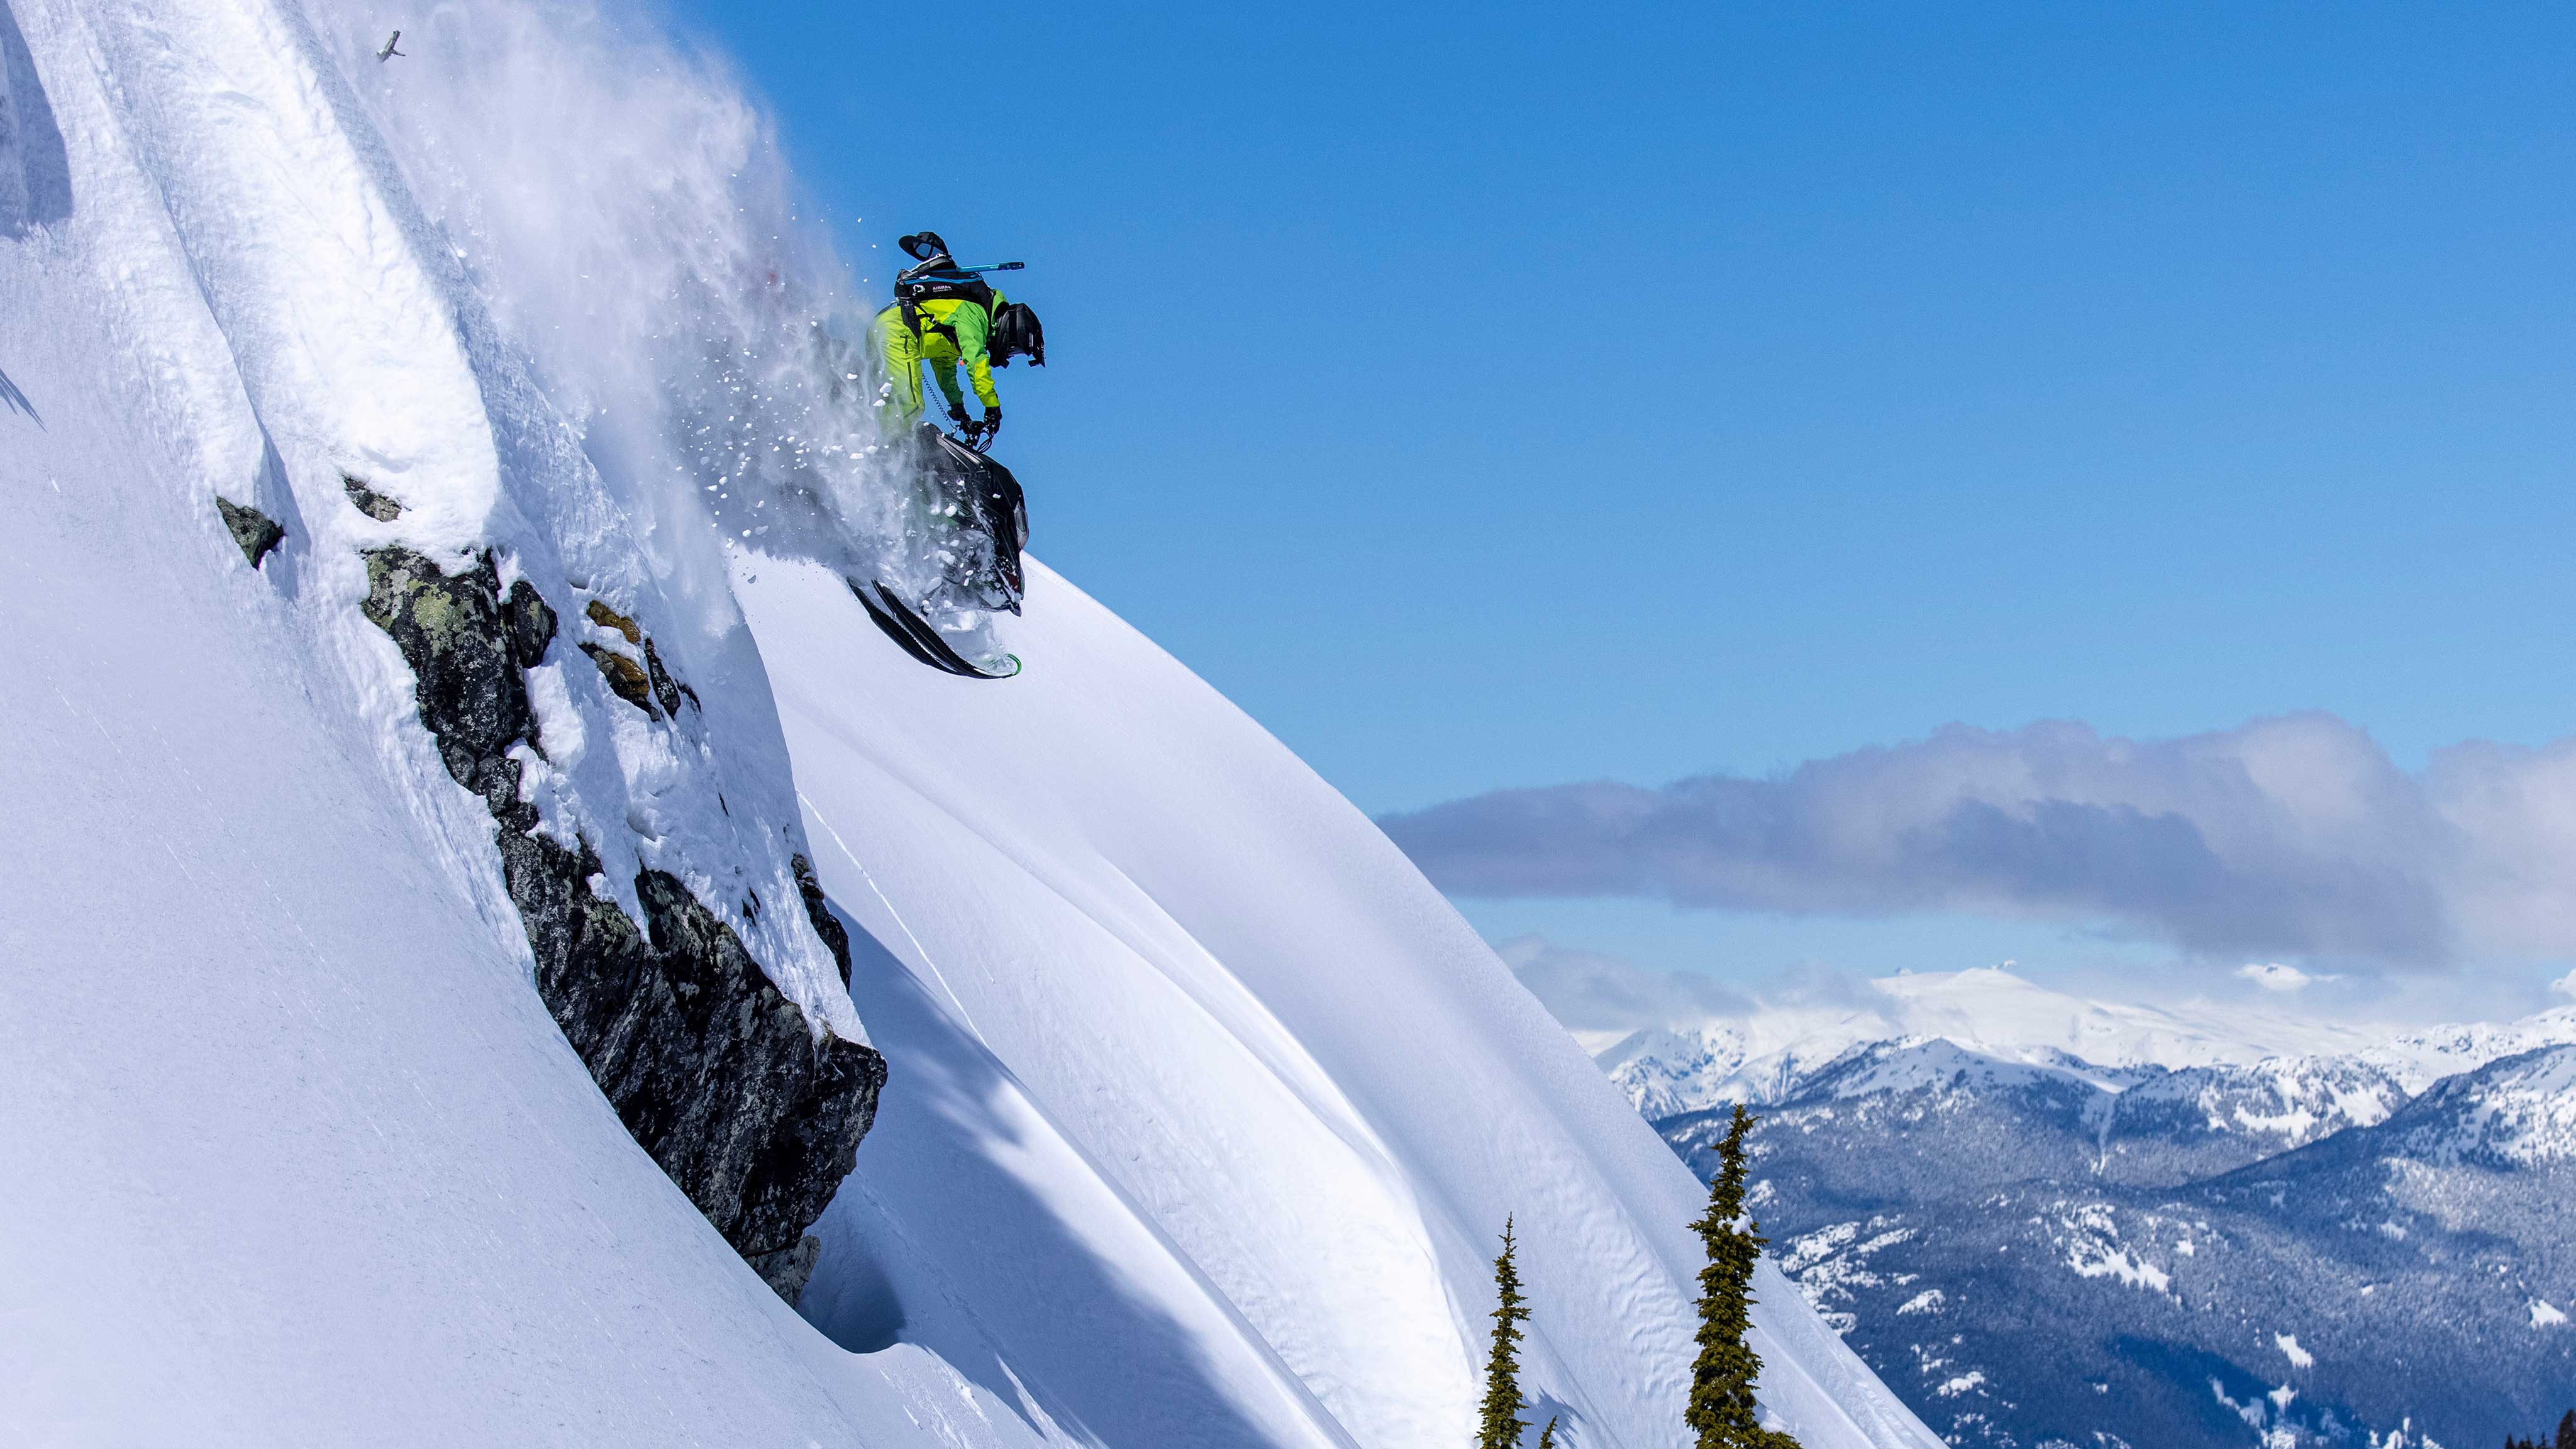 Ski-Doo Ambassador Cody McNolty jumping a cliff with his Ski-Doo snowmobile